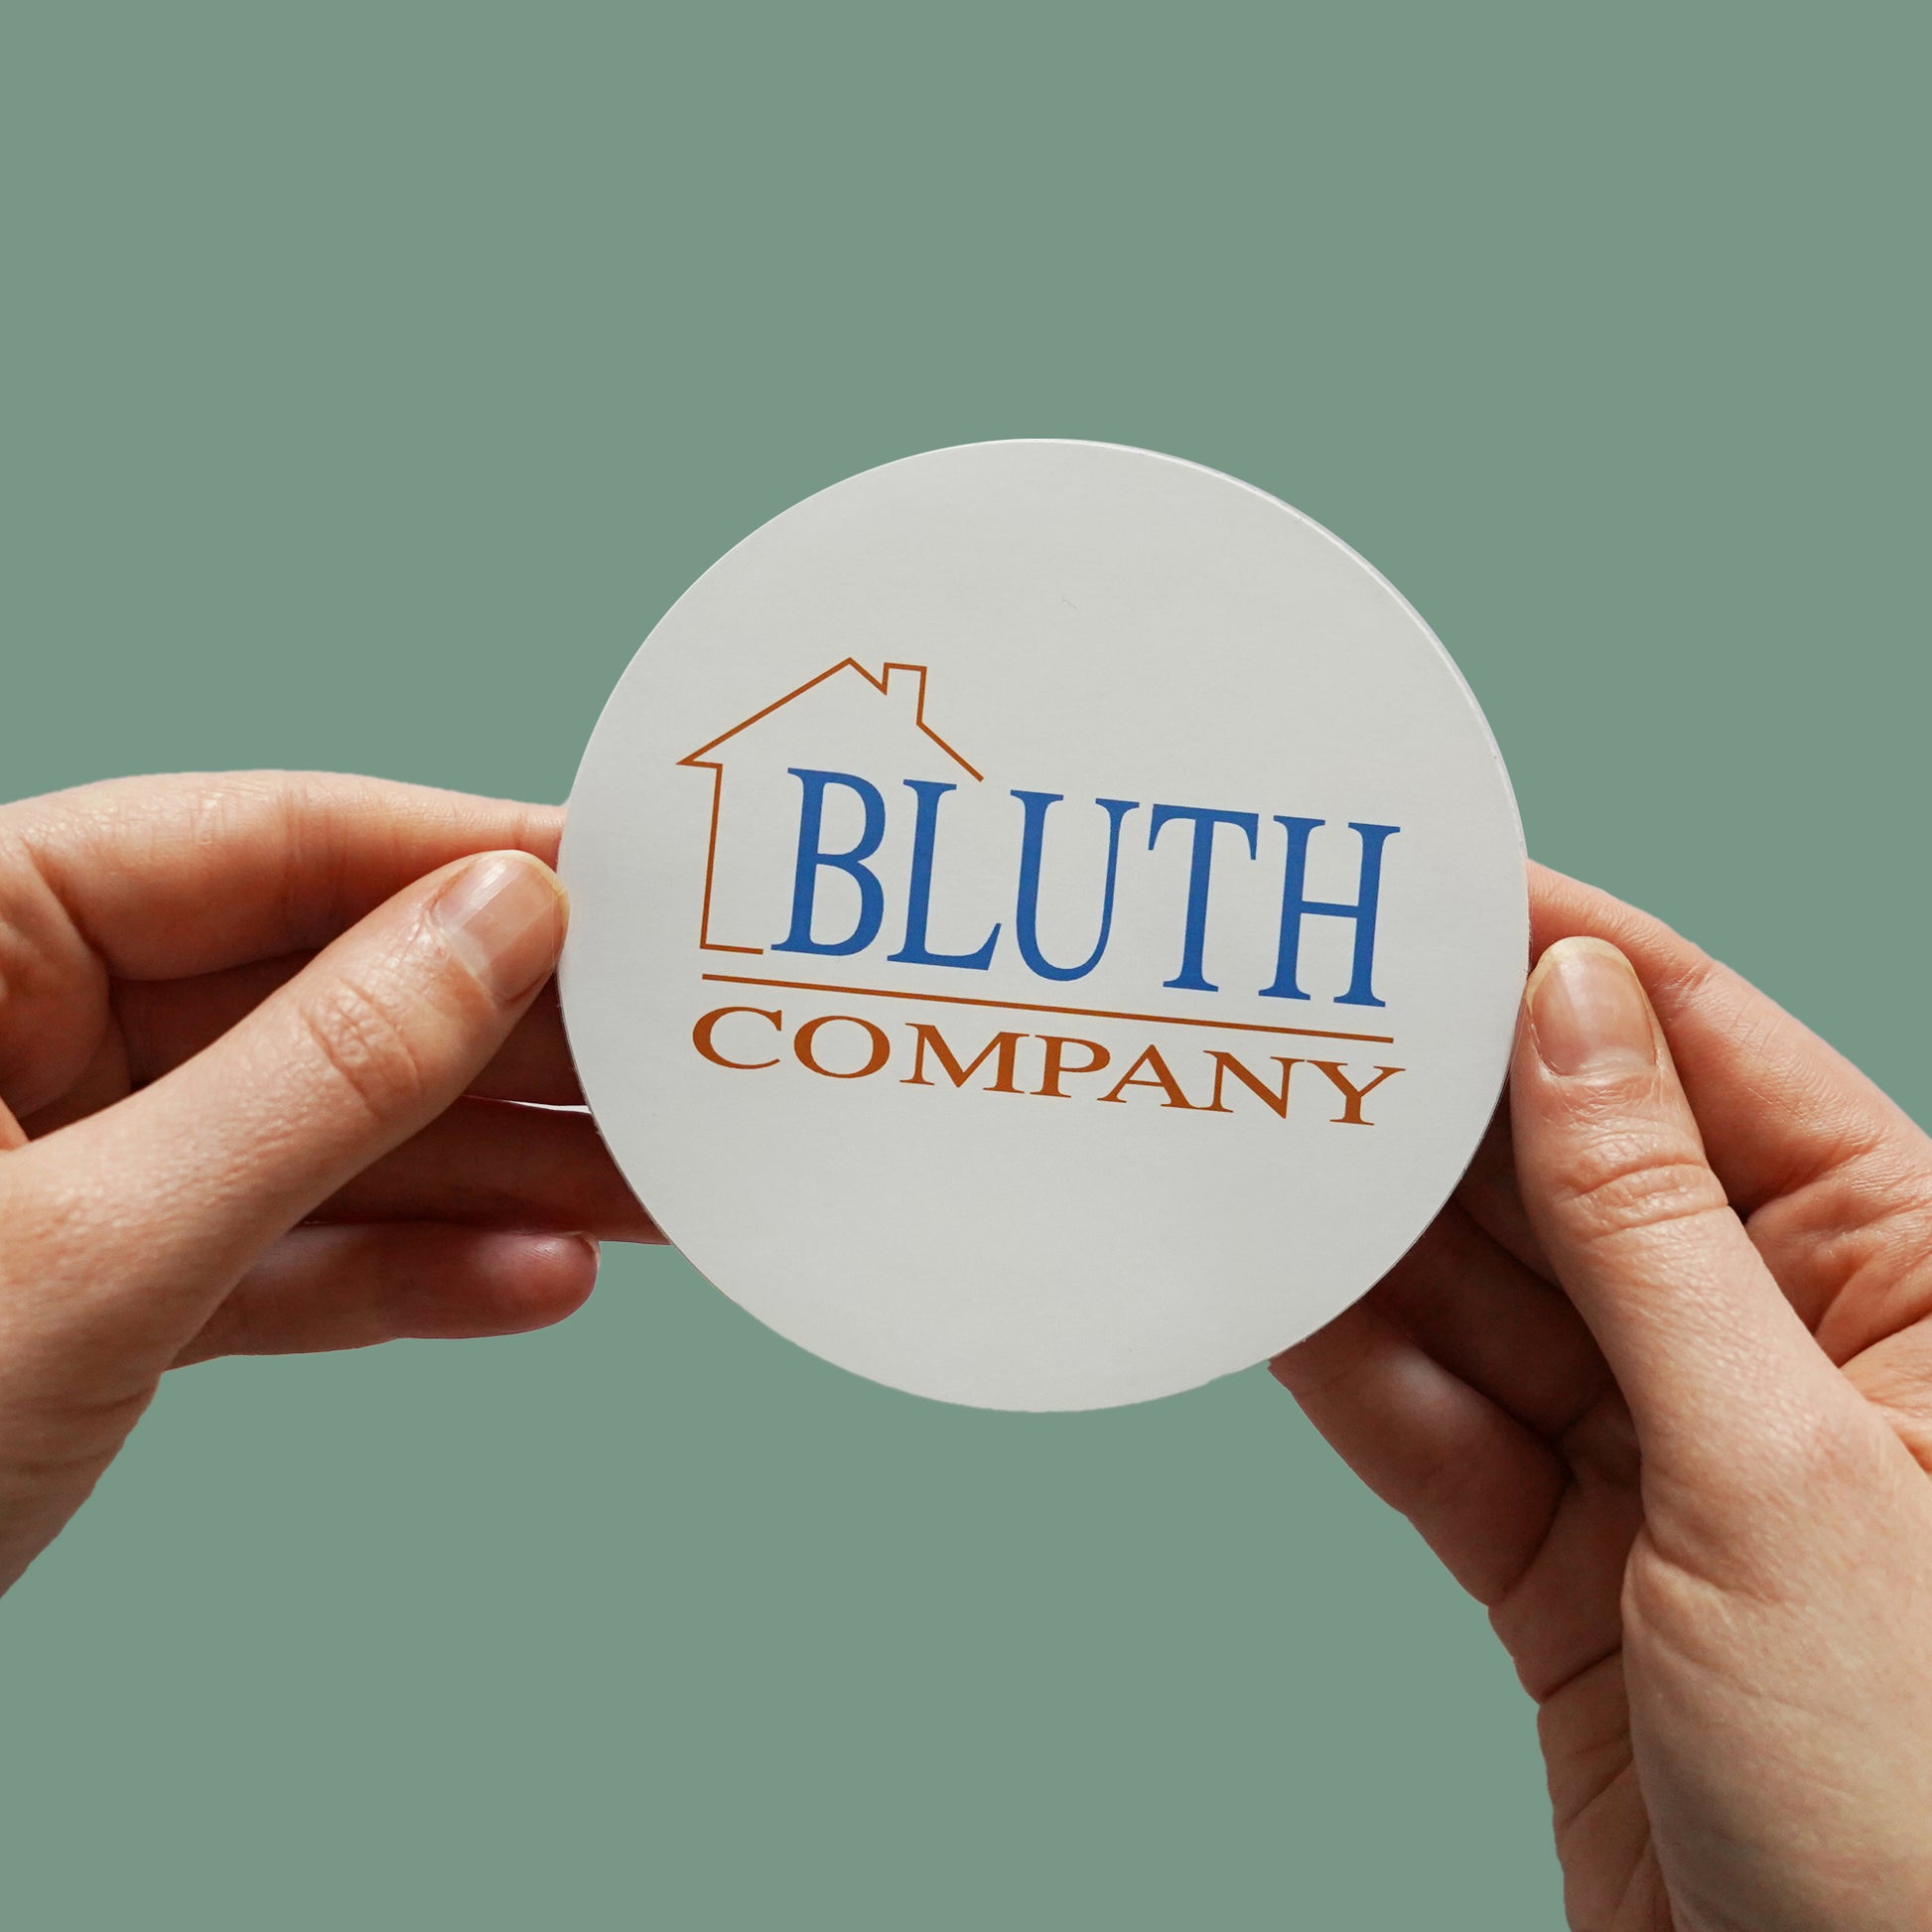 Arrested Development "Bluth Company" Sticker